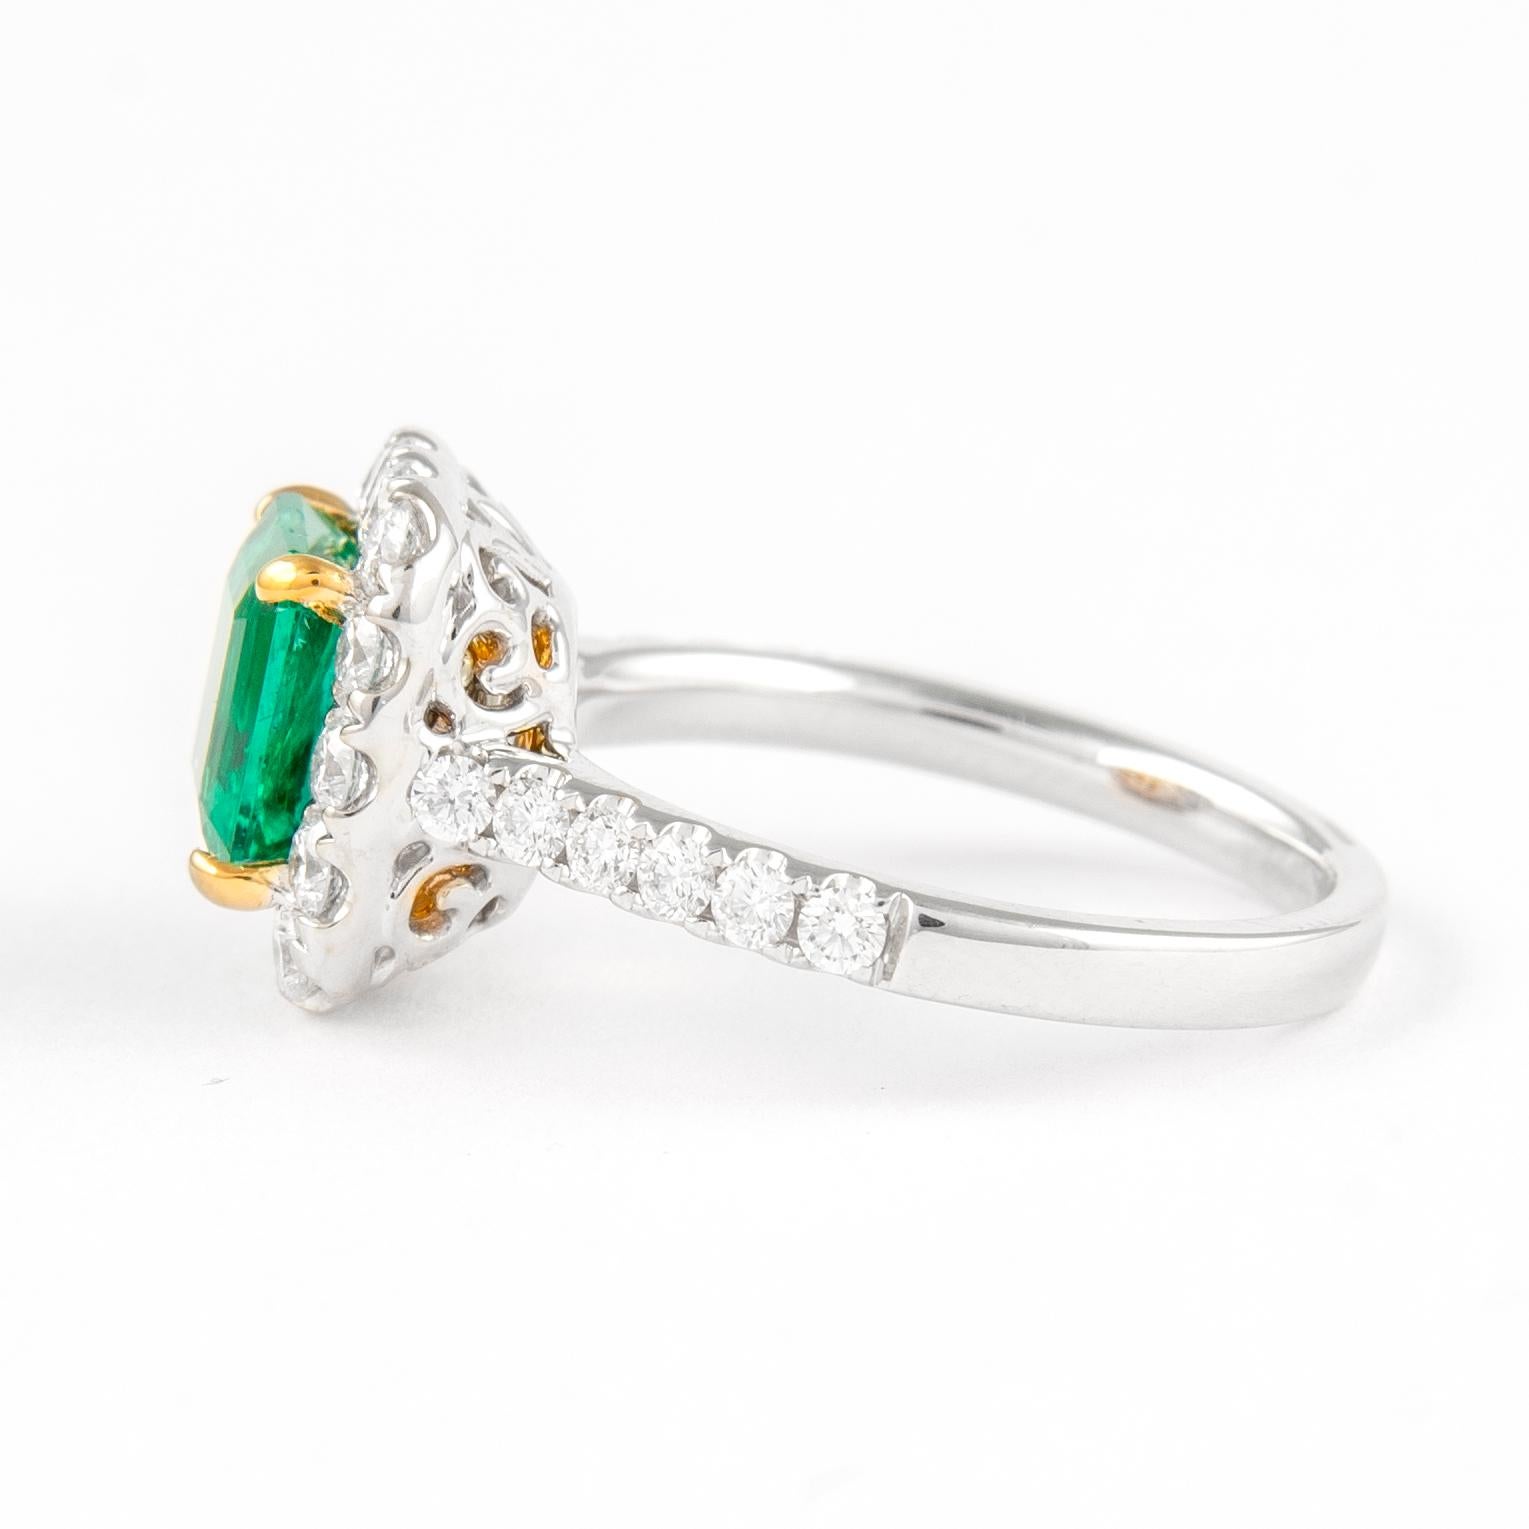 Contemporary 2.56ct Carat Emerald Cut Emerald with Diamond Halo Ring 18k White Gold